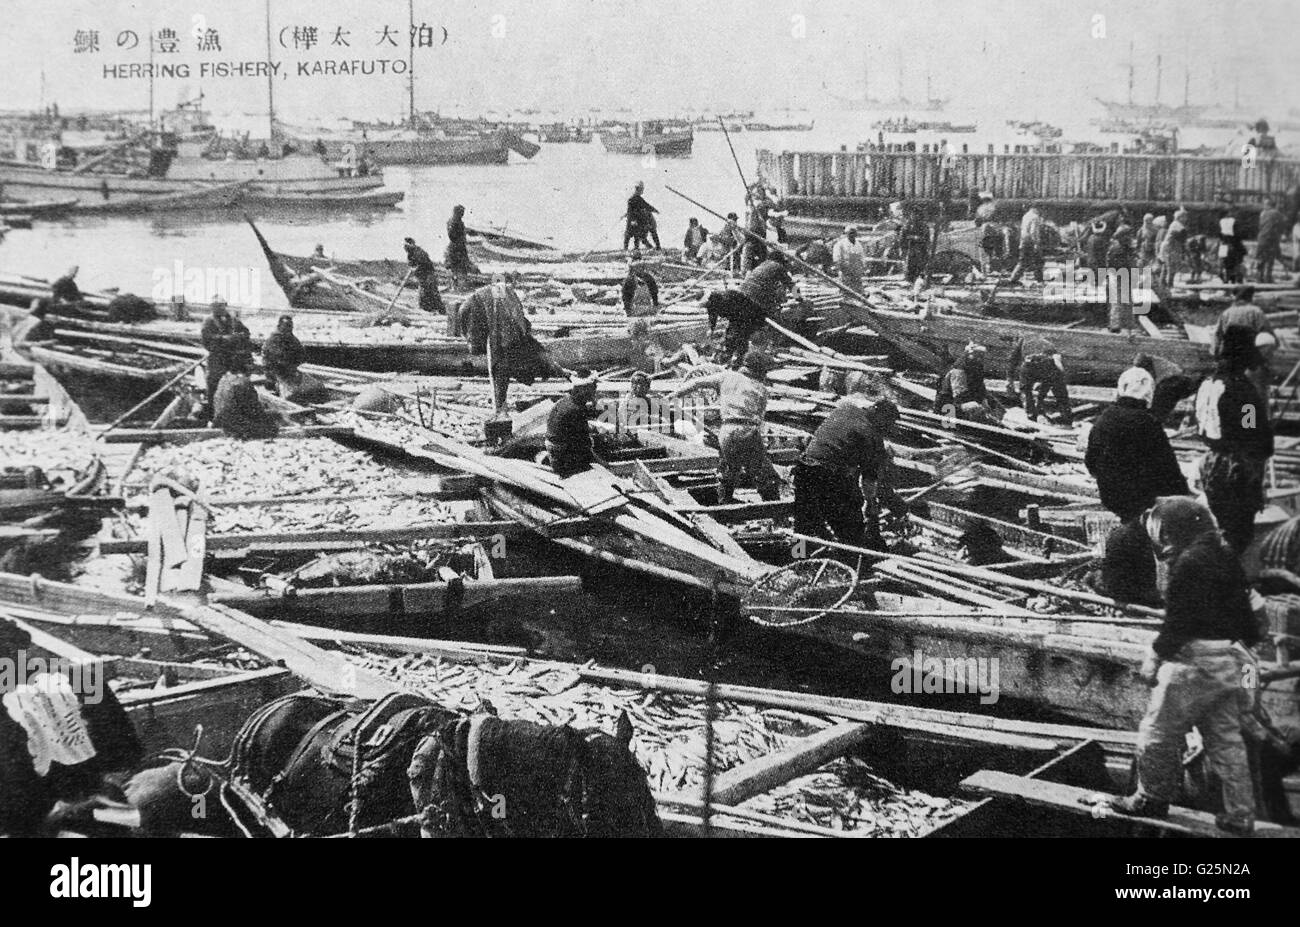 La pêche de hareng, Odomari, Karafuto, Hokkaido, Japon. c 1921. Banque D'Images